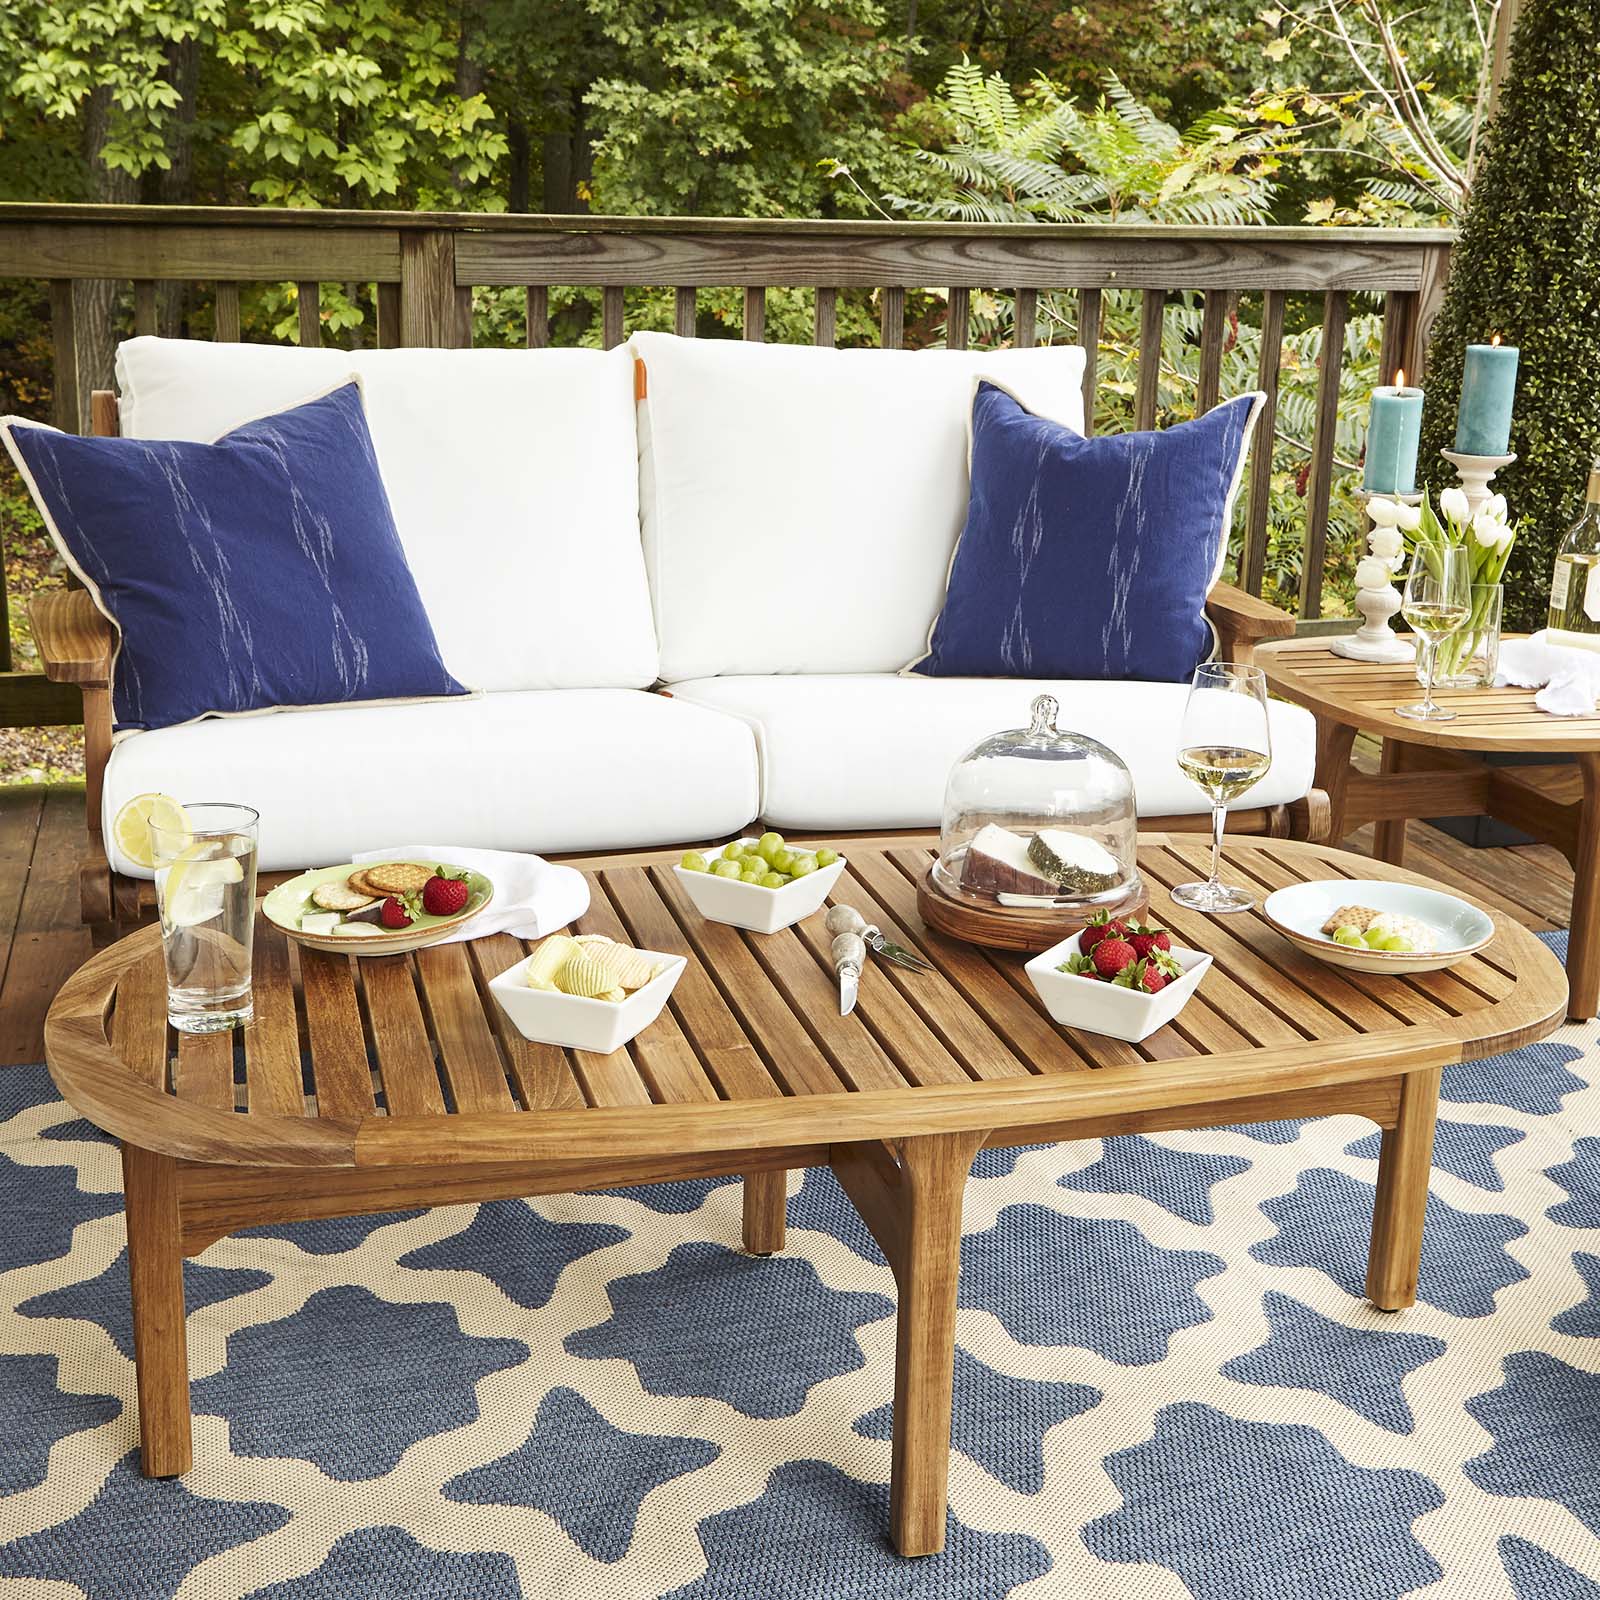 Upgrade Your Outdoor Space With Premium Teak Furniture